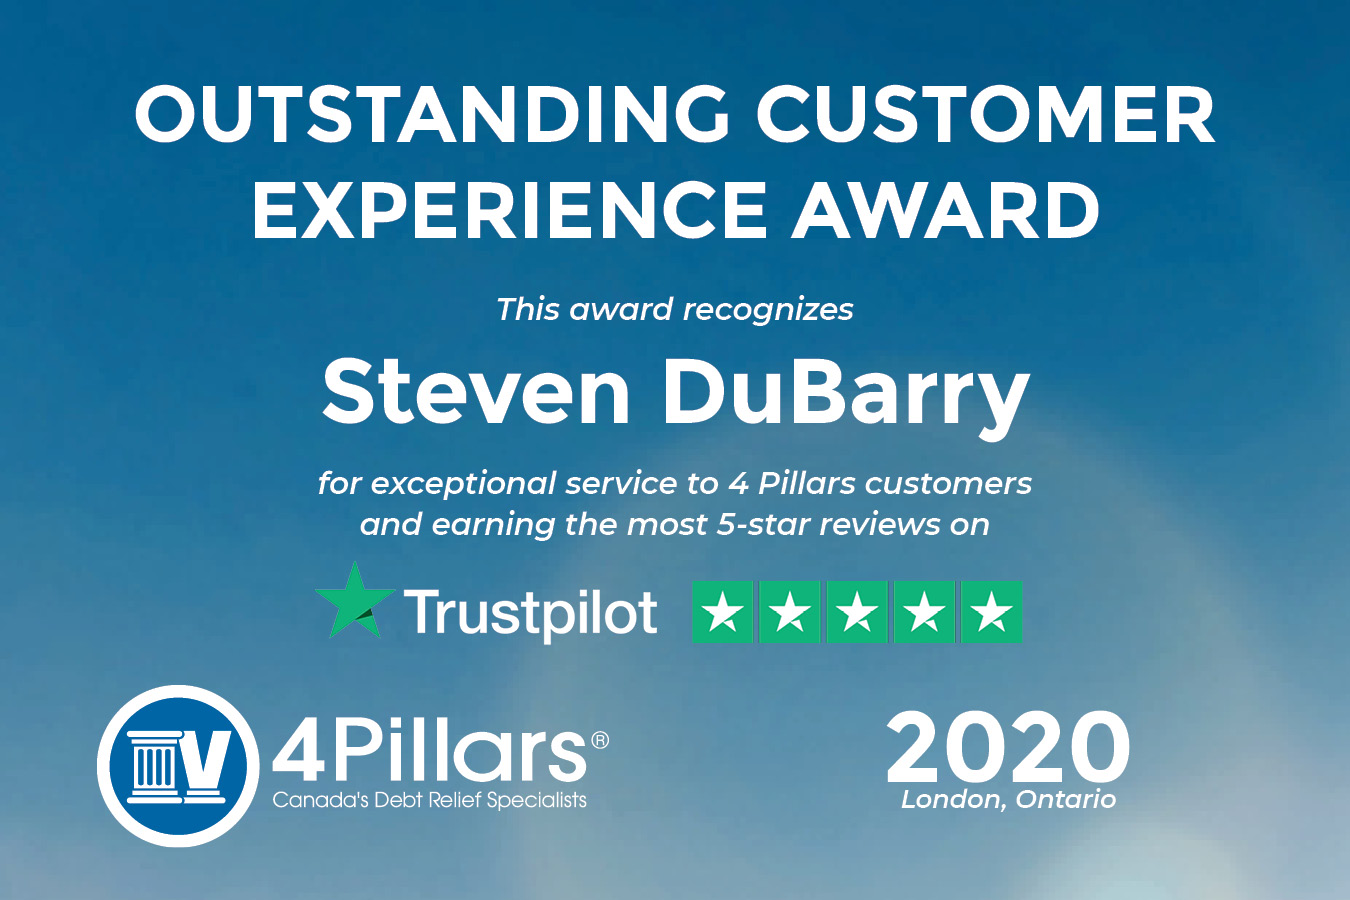 Trustpilot Customer Service Award 2020 for Steve DuBarry